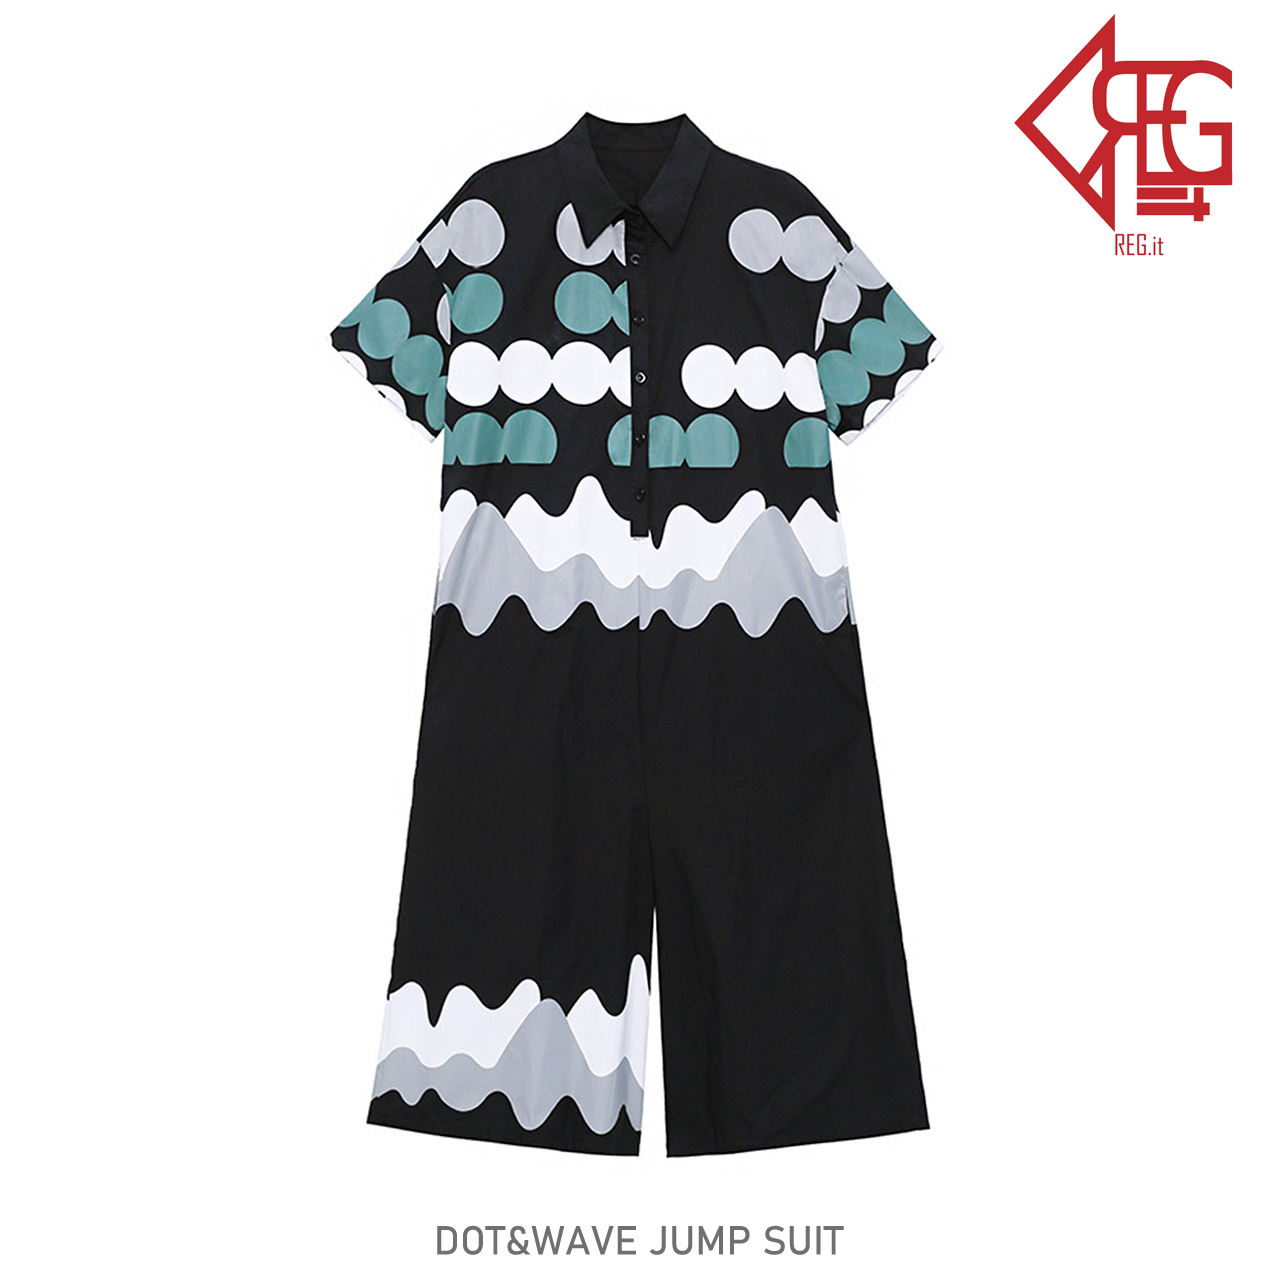 Regit Dot Wave Jump Suit Black S S 韓国ファッション オールインワン つなぎ ジャンプスーツ 半袖 個性的 ドット ユニセックス 10代 代 着映え 映える ネット通販 Tac010 Regit